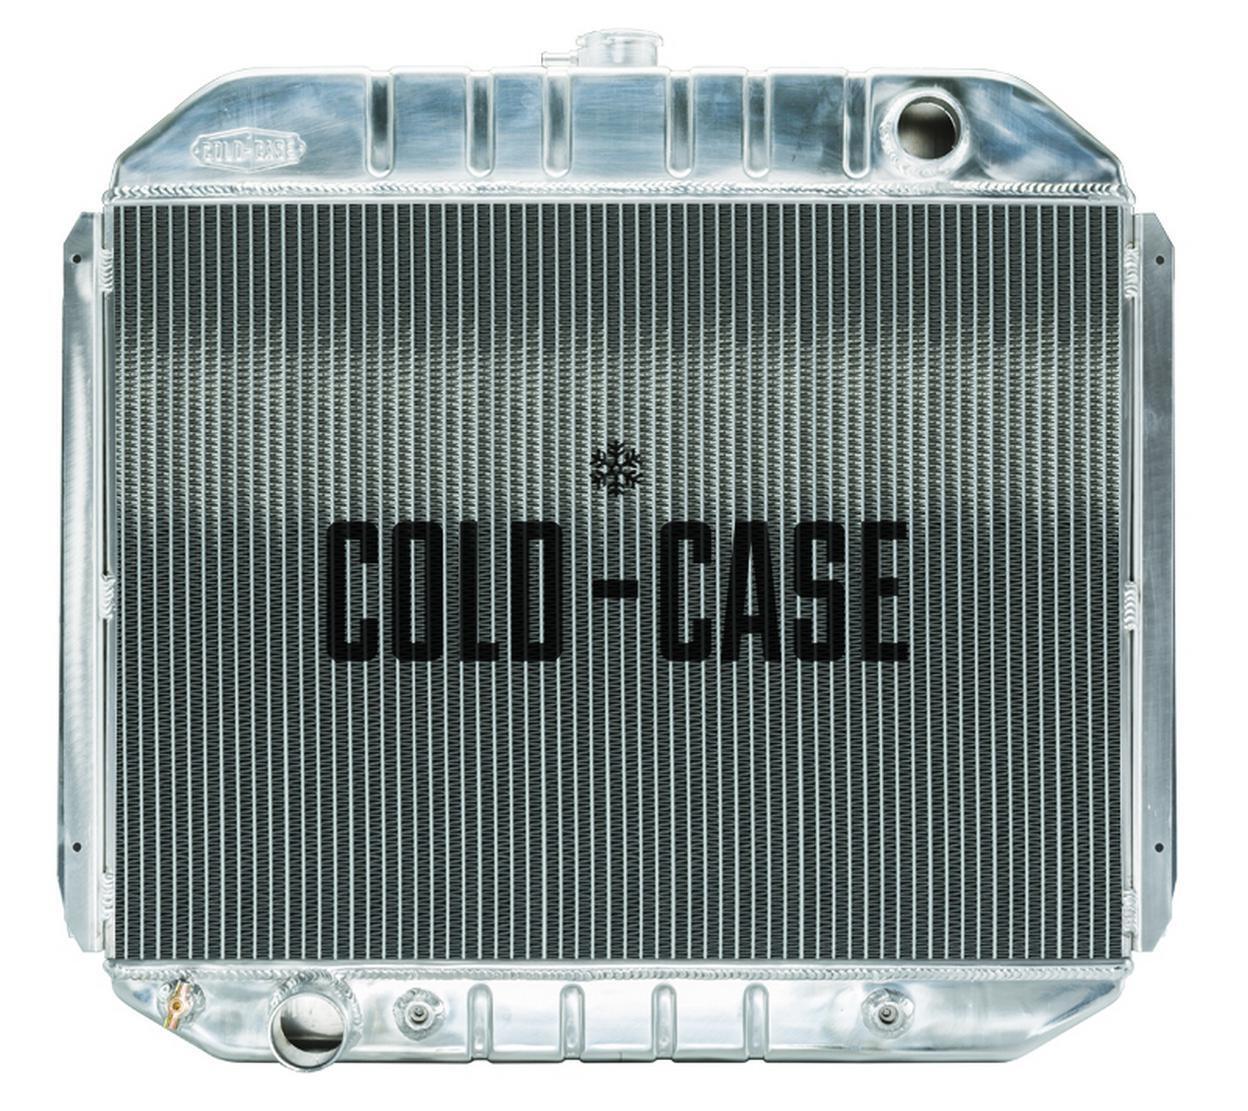 COLD-CASE Radiators